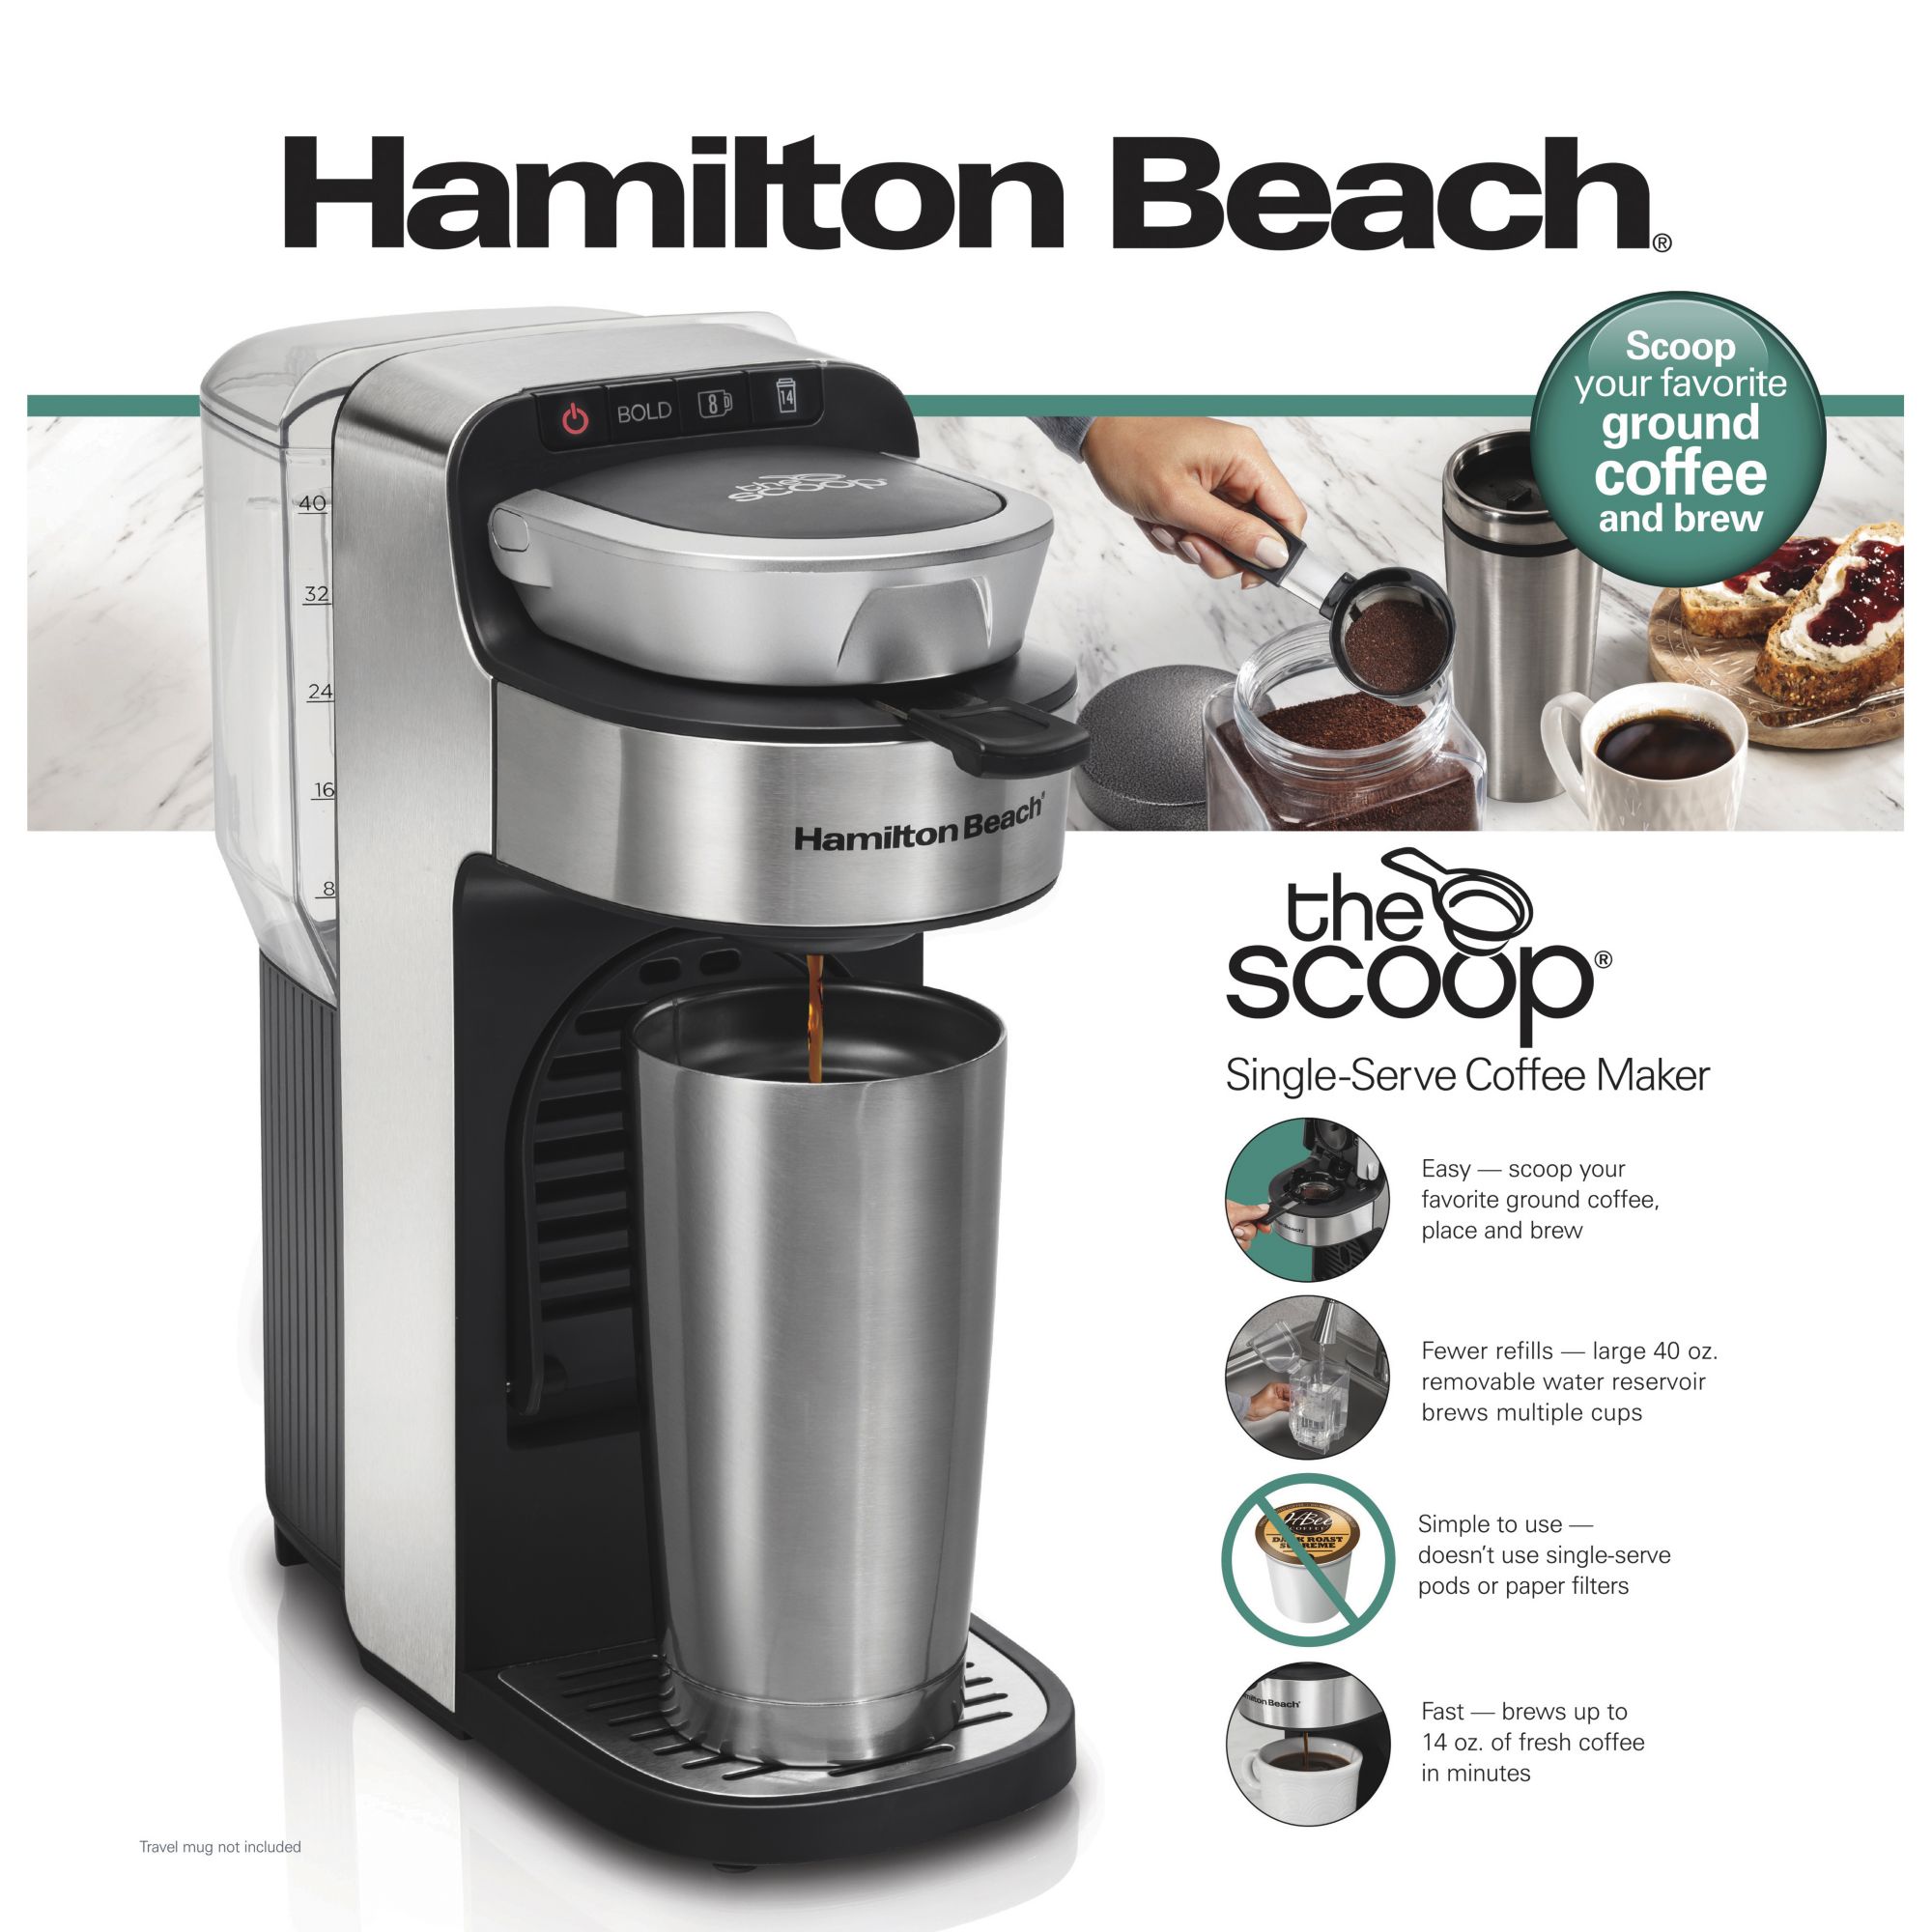 Hamilton Beach The Scoop Single-Serve Coffee Maker